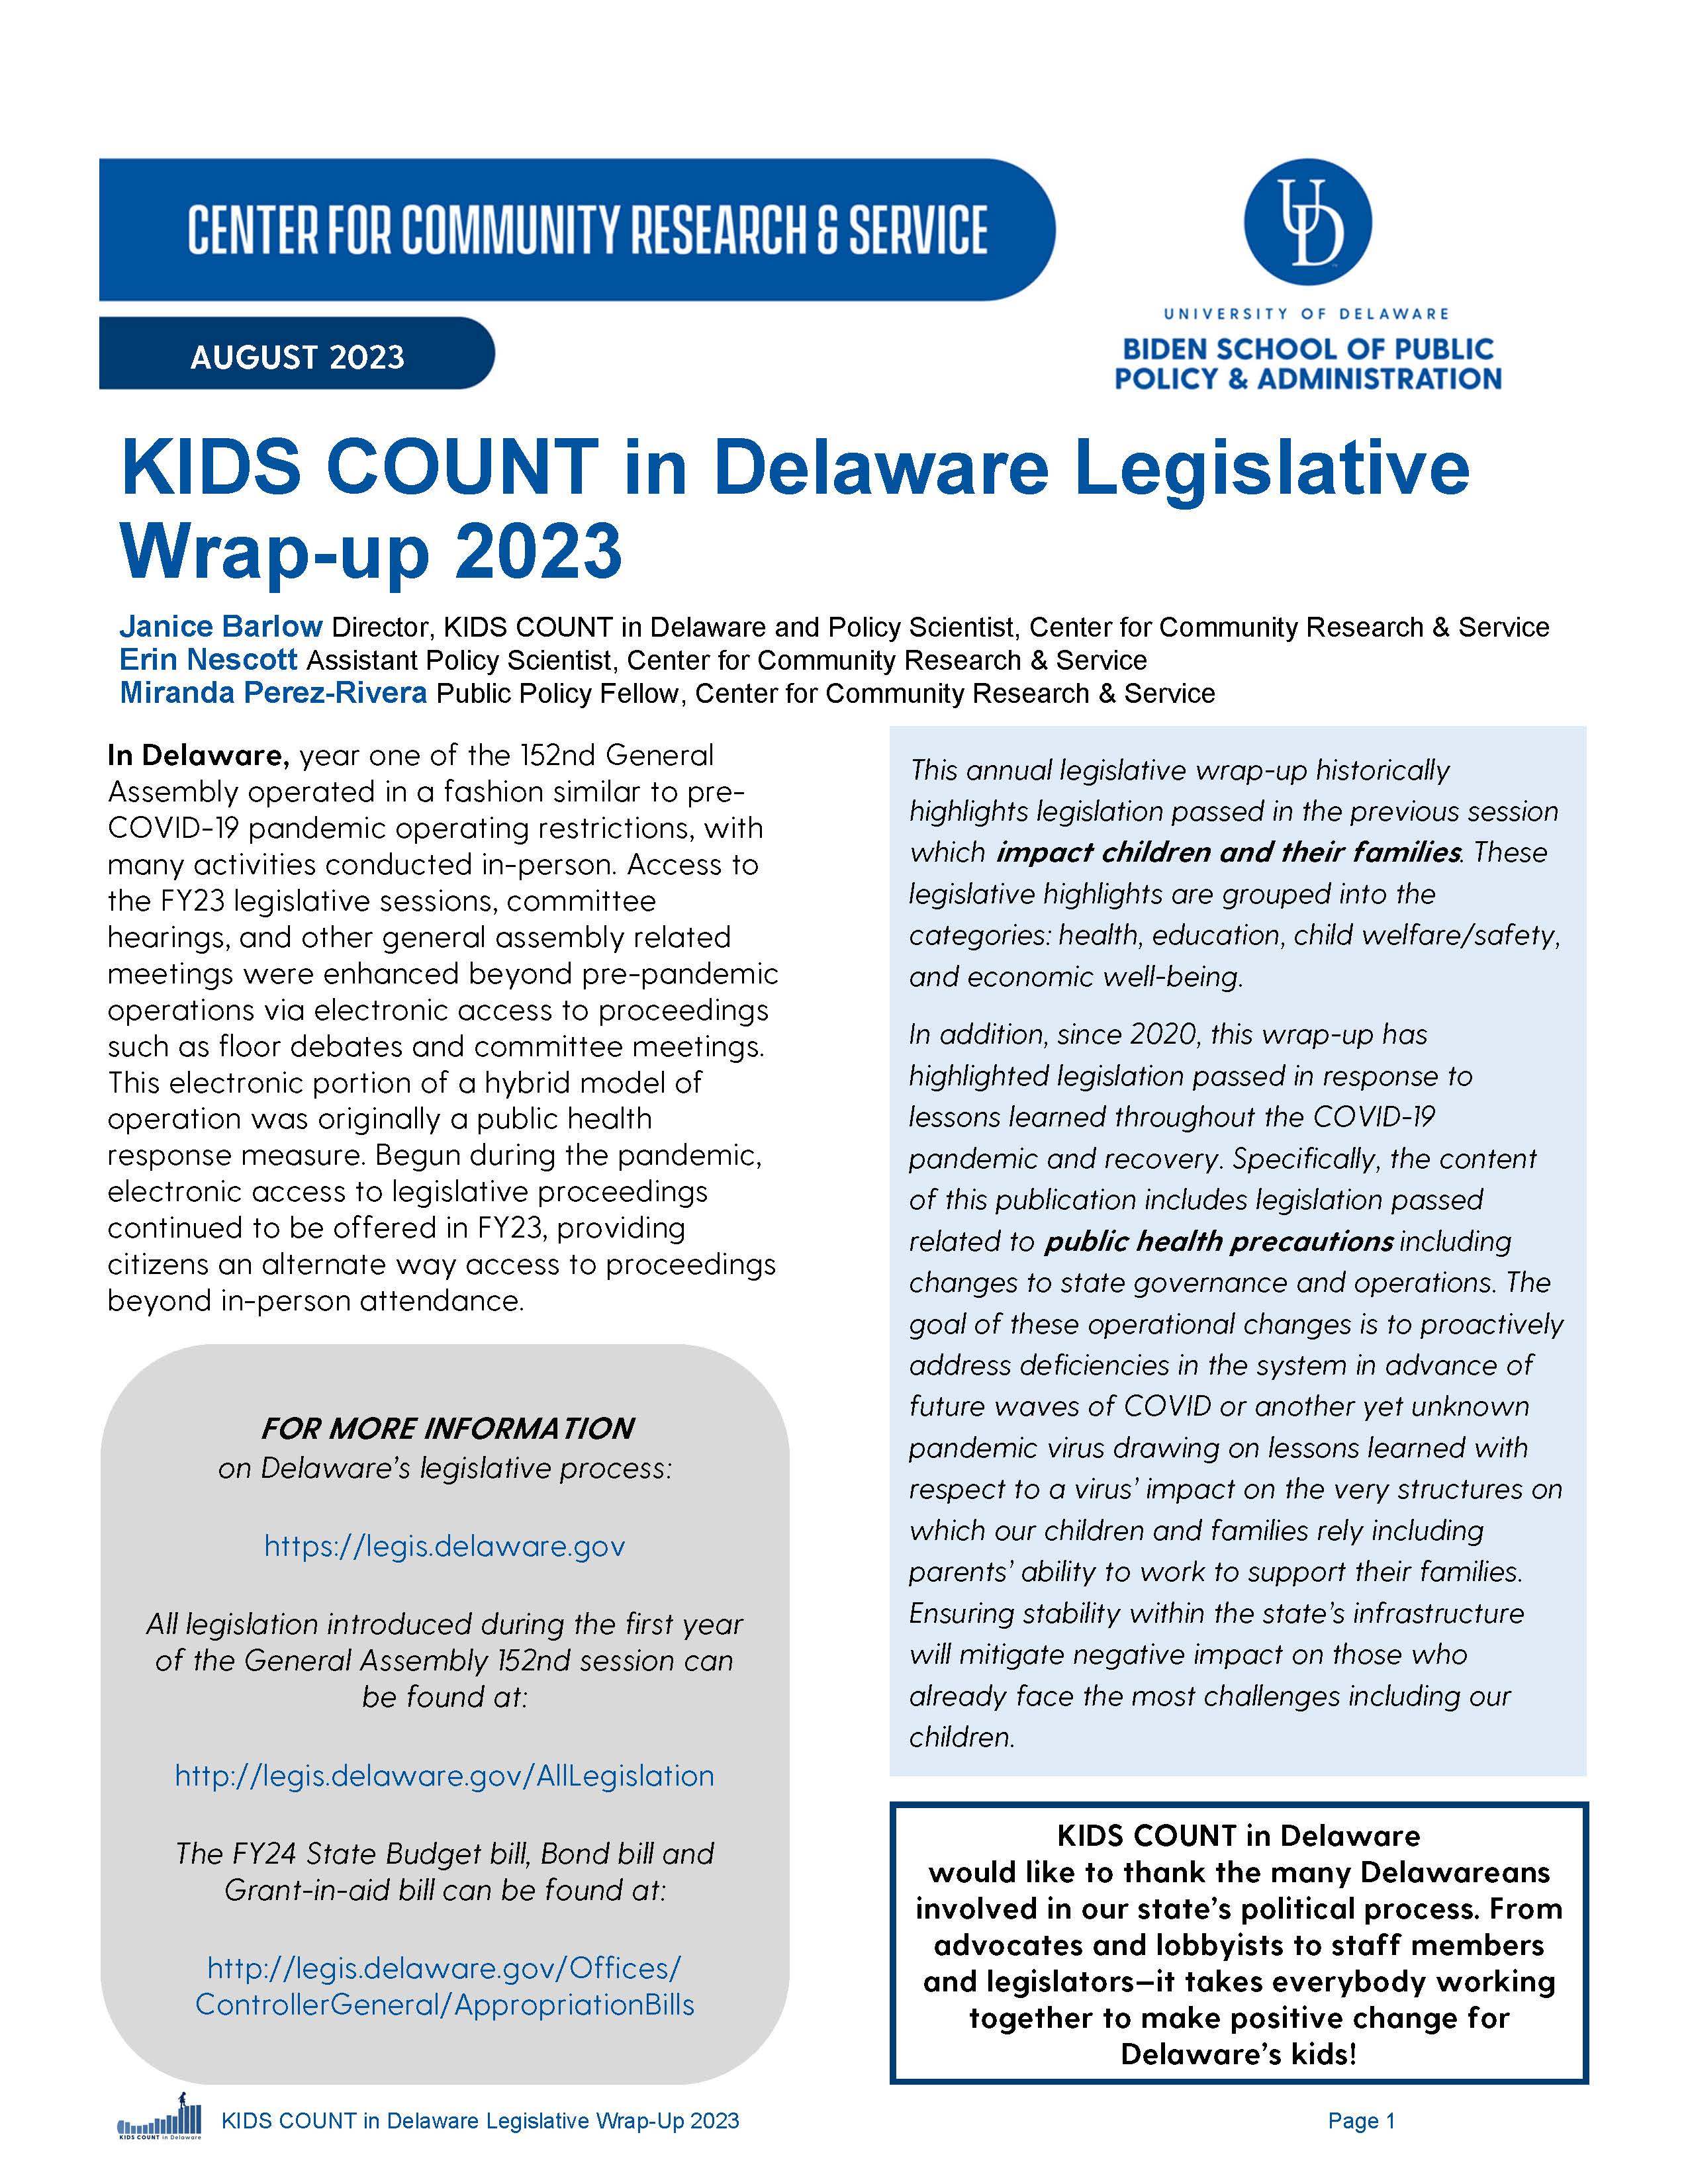 KIDS COUNT in Delaware Legislative Wrap-up 2023